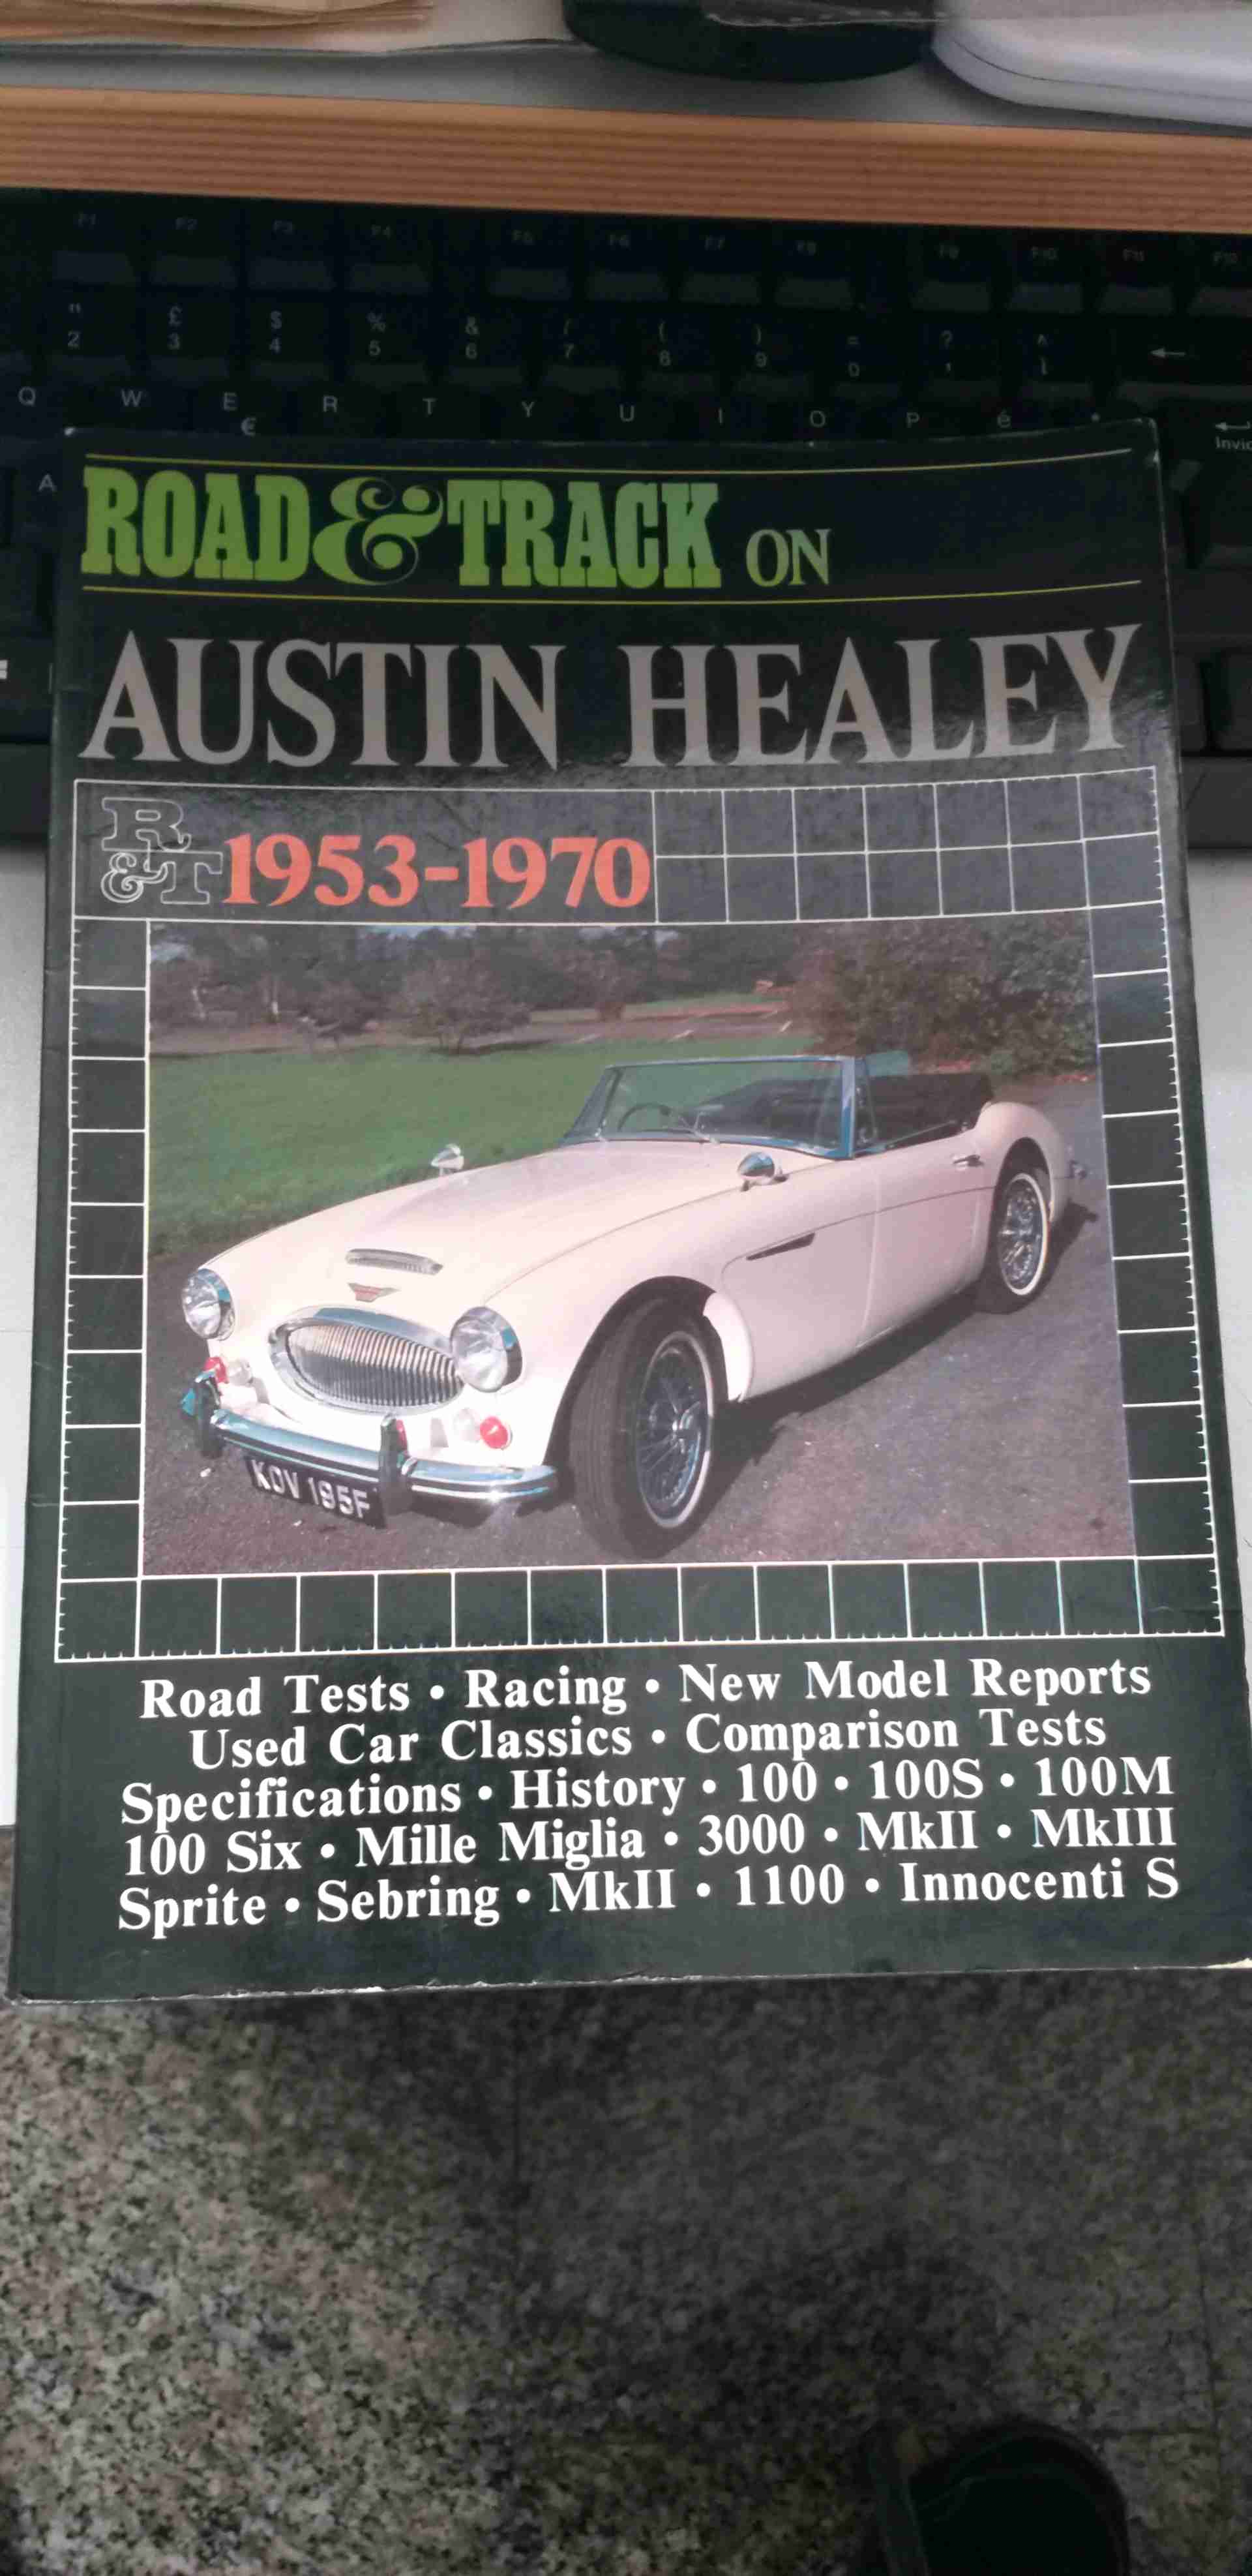 Road & track on Austin Healey 1953-1970